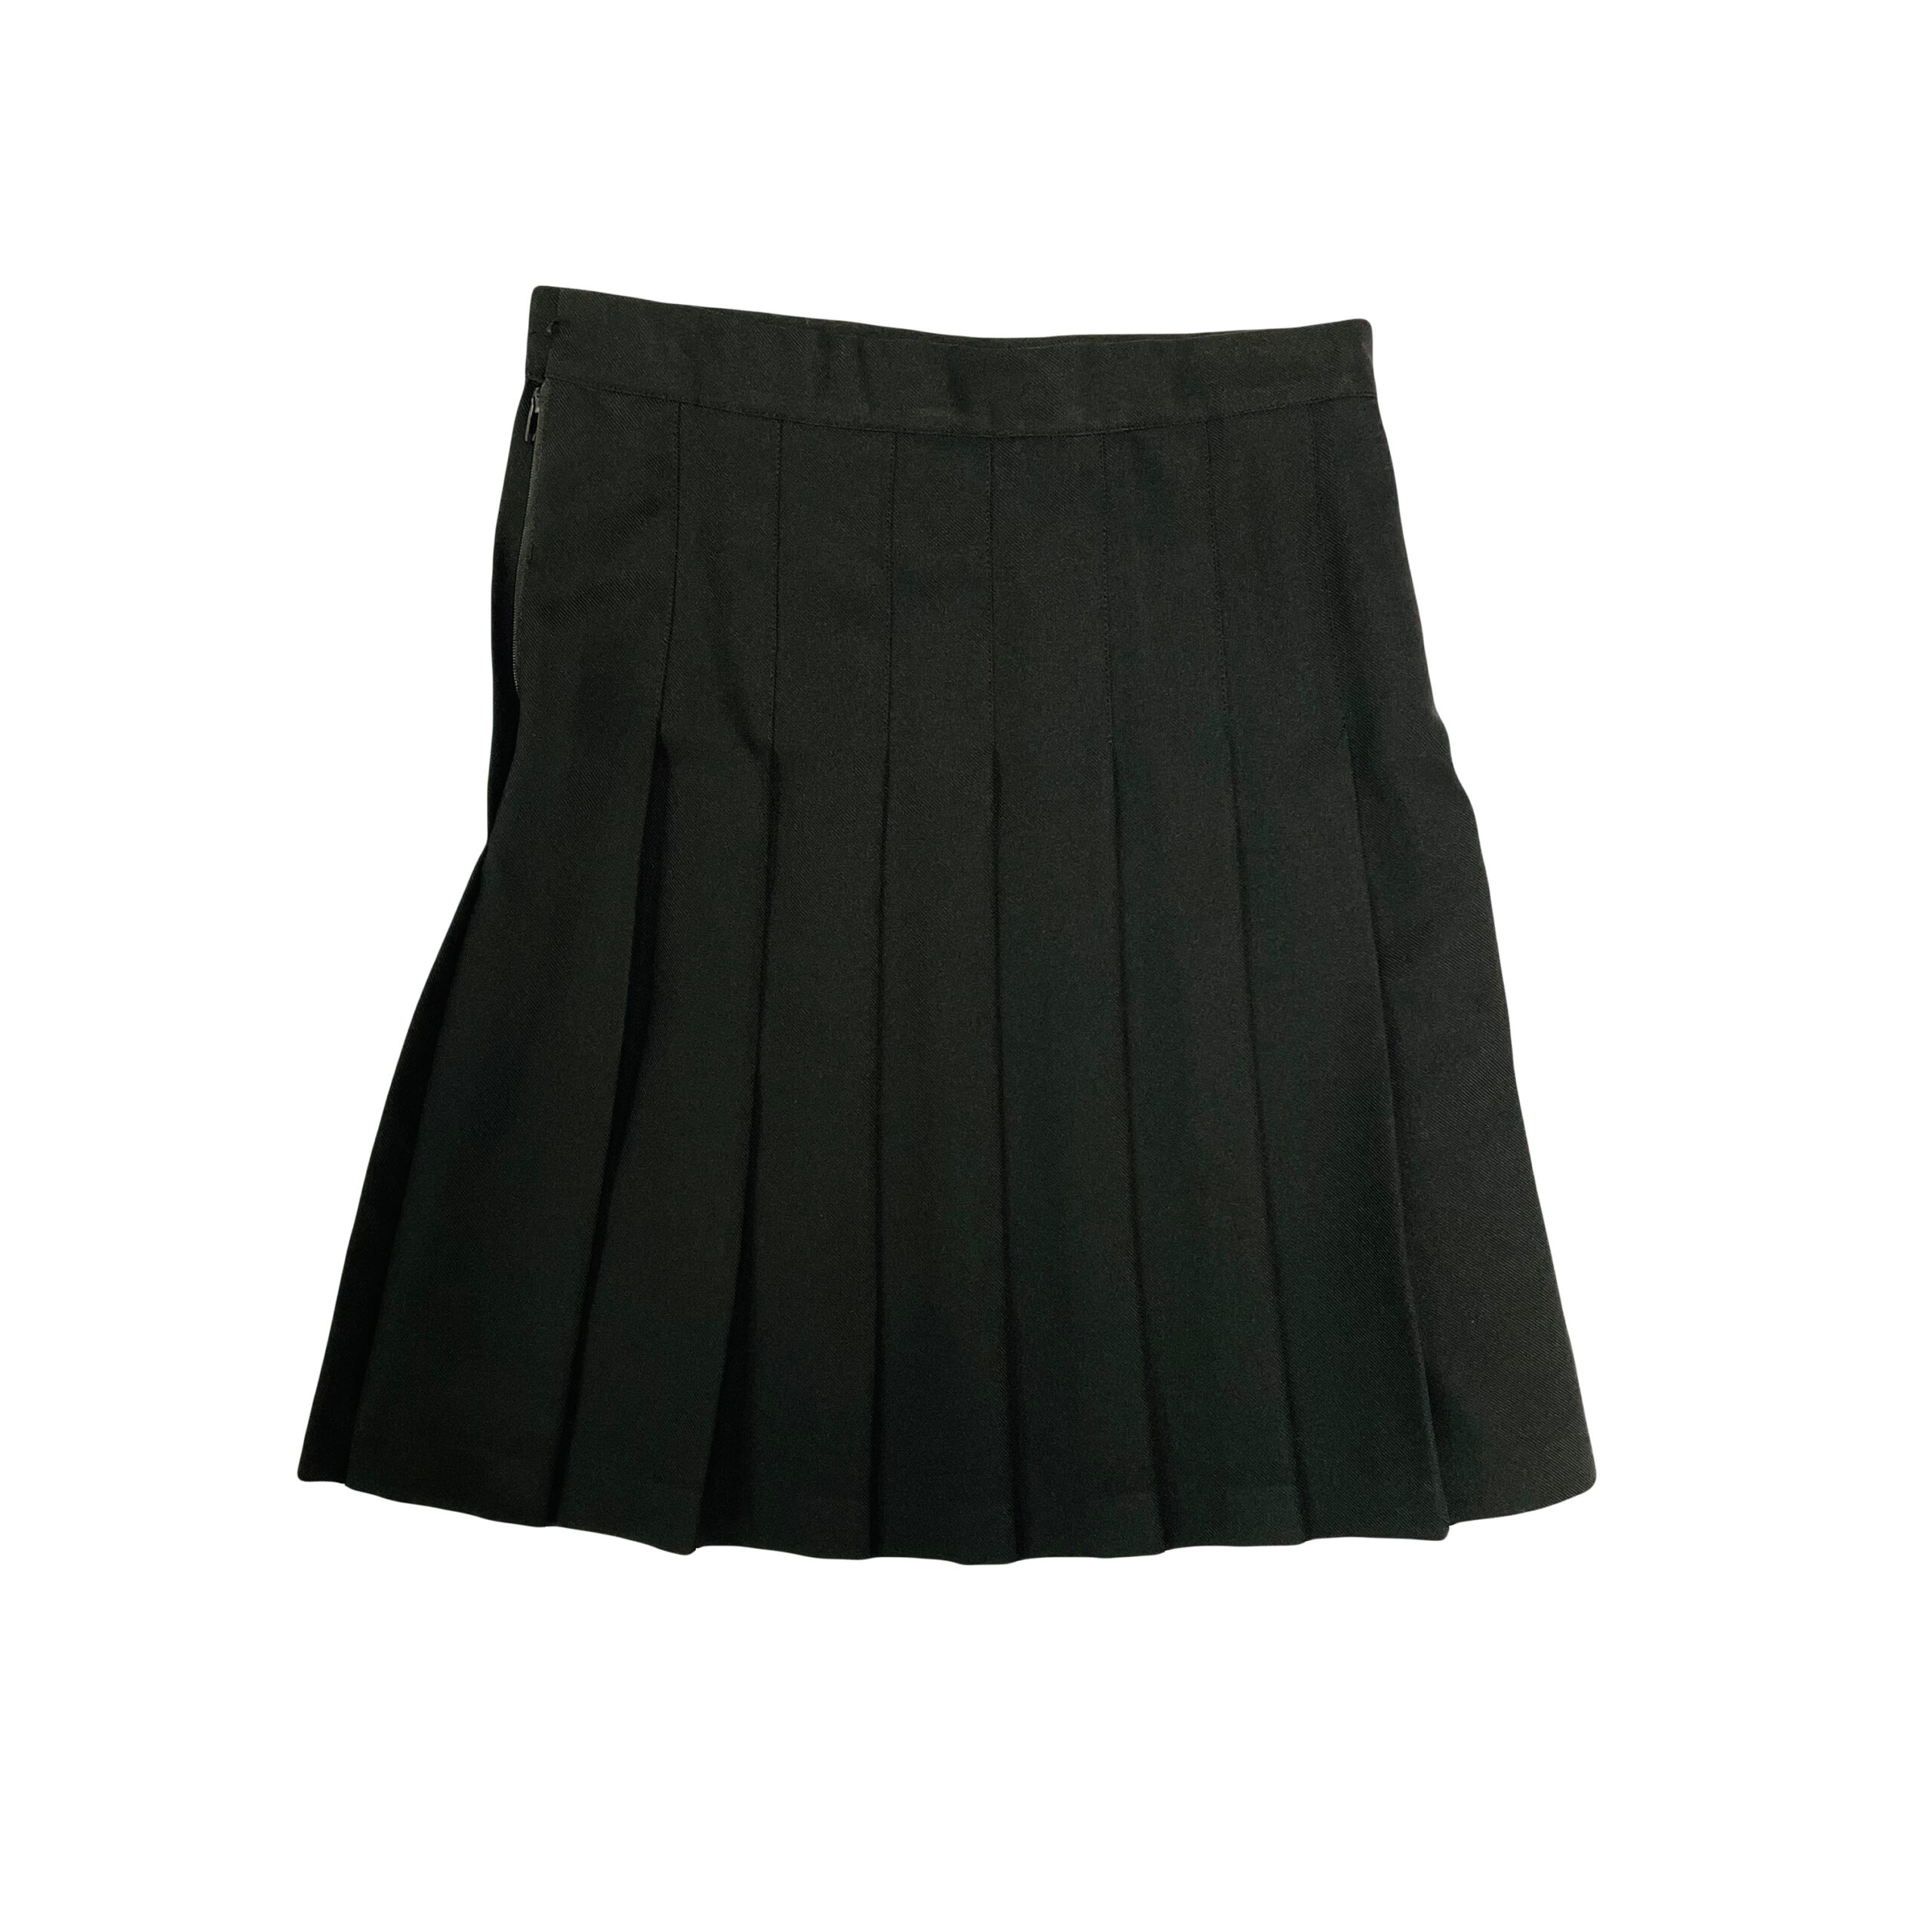 The Archbishops School Skirt